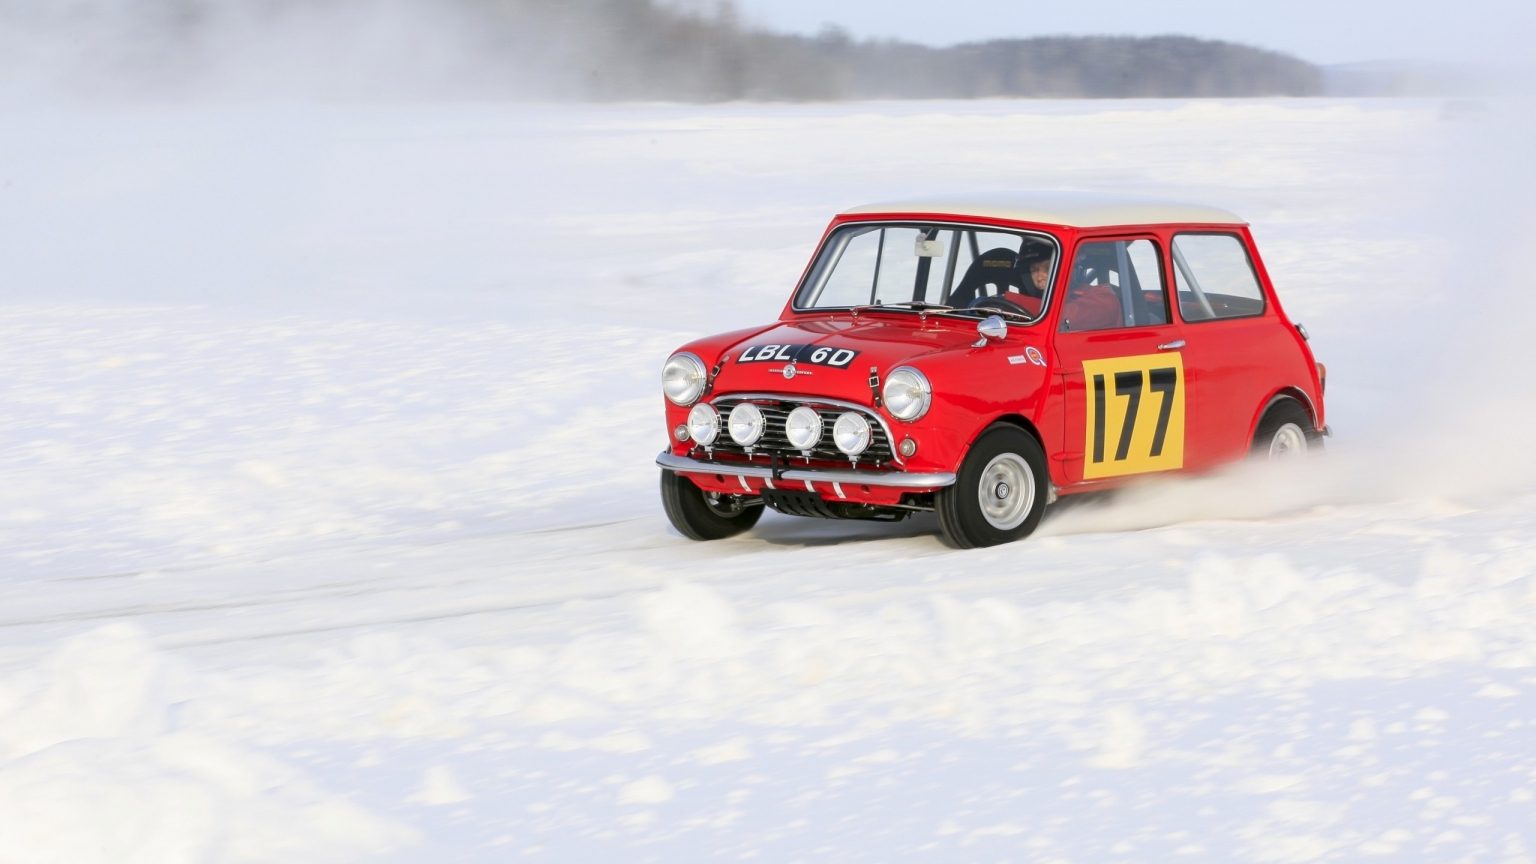 Mini Snow Race for 1536 x 864 HDTV resolution